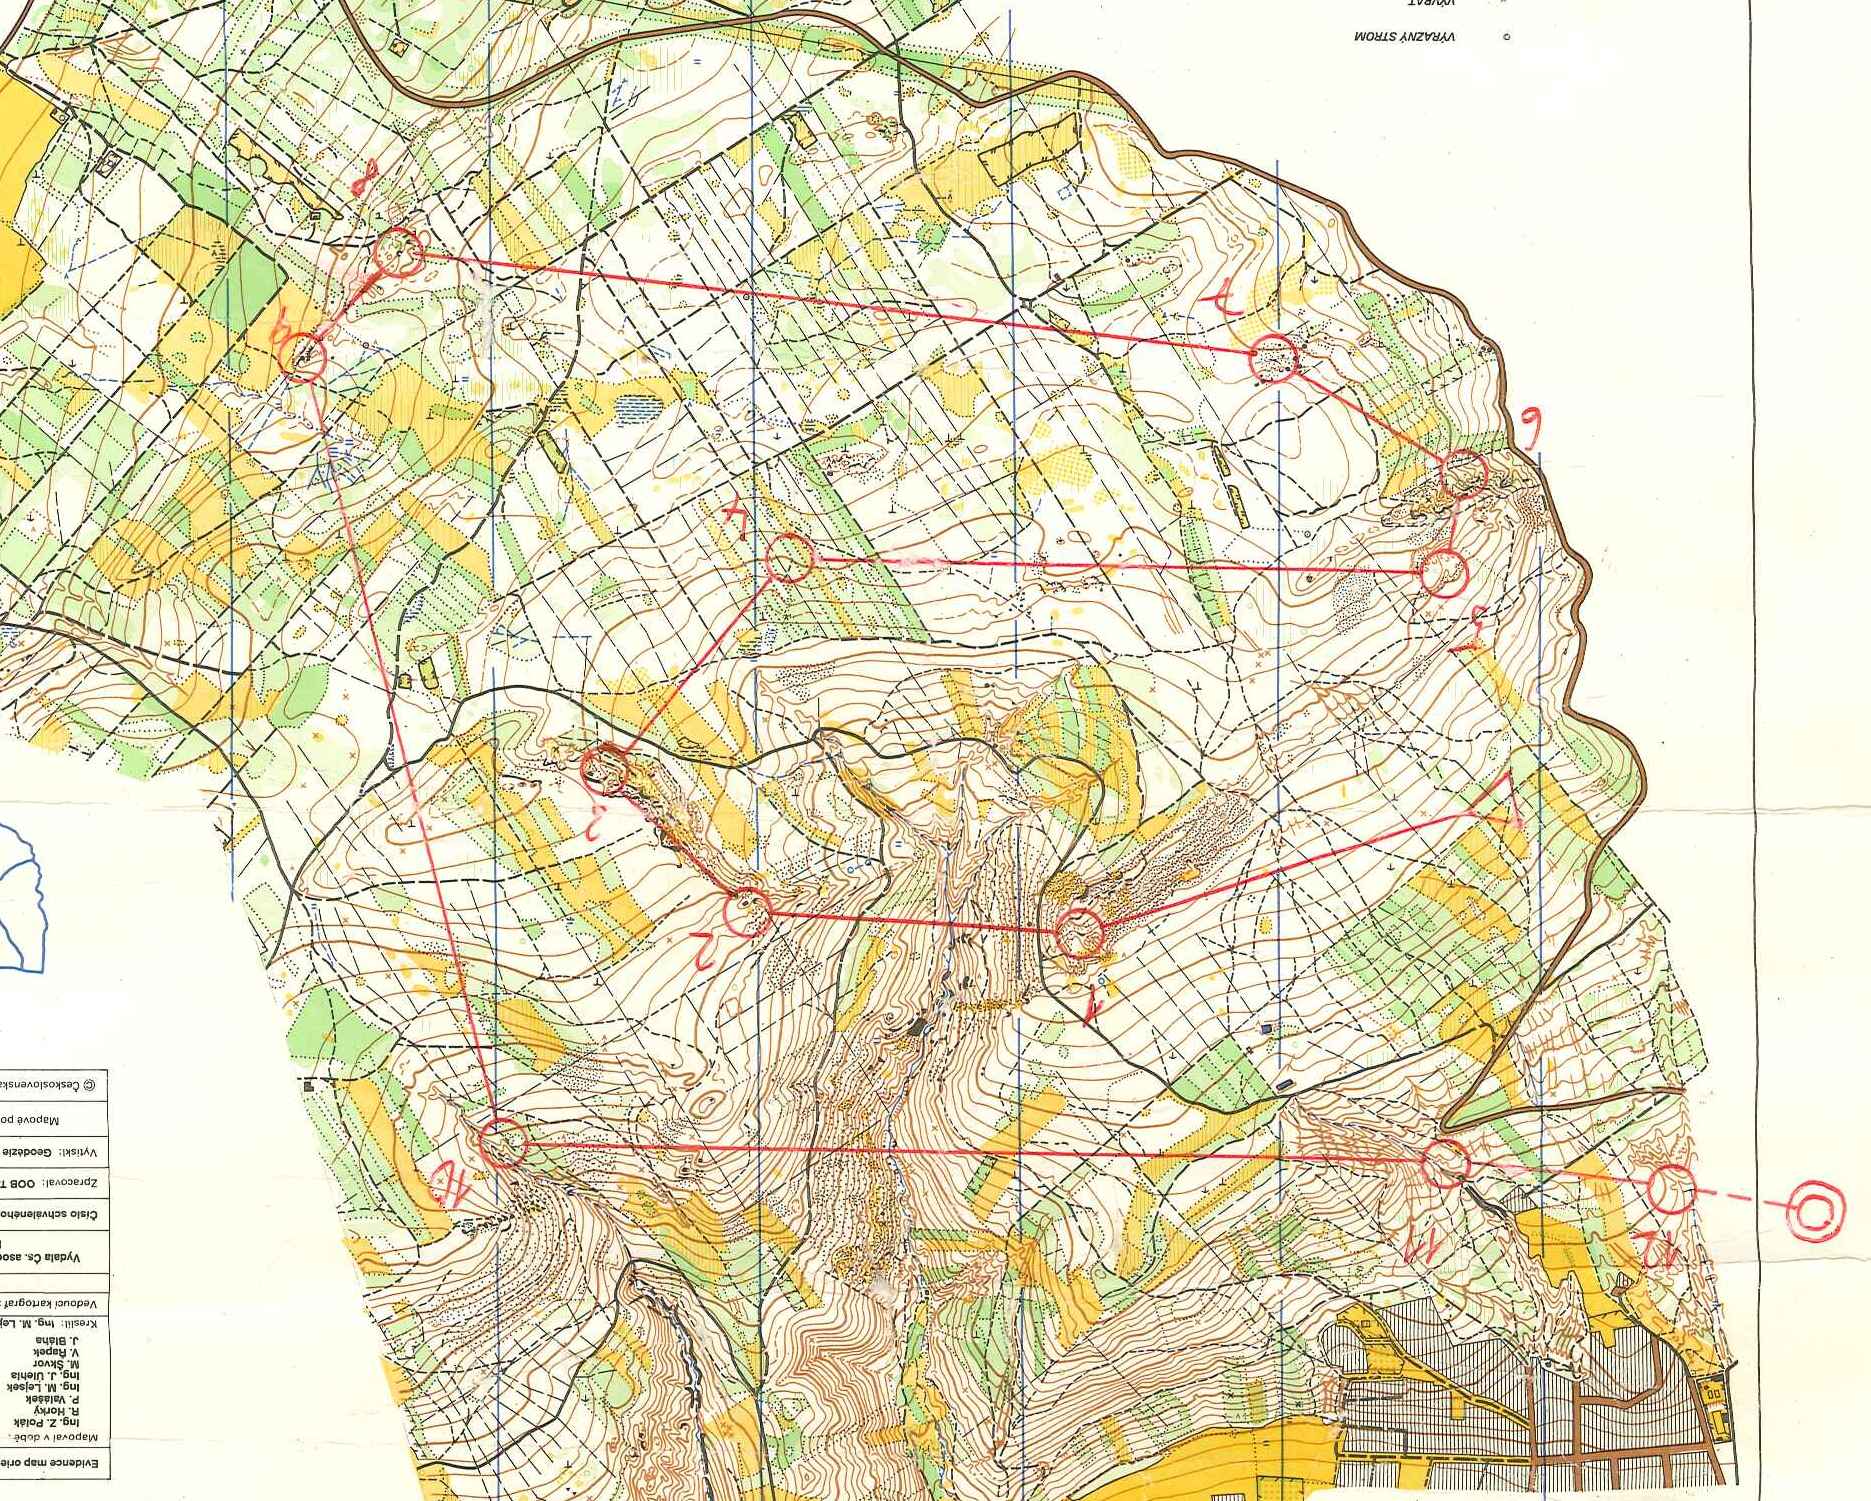 Landskamp (1990-10-20)